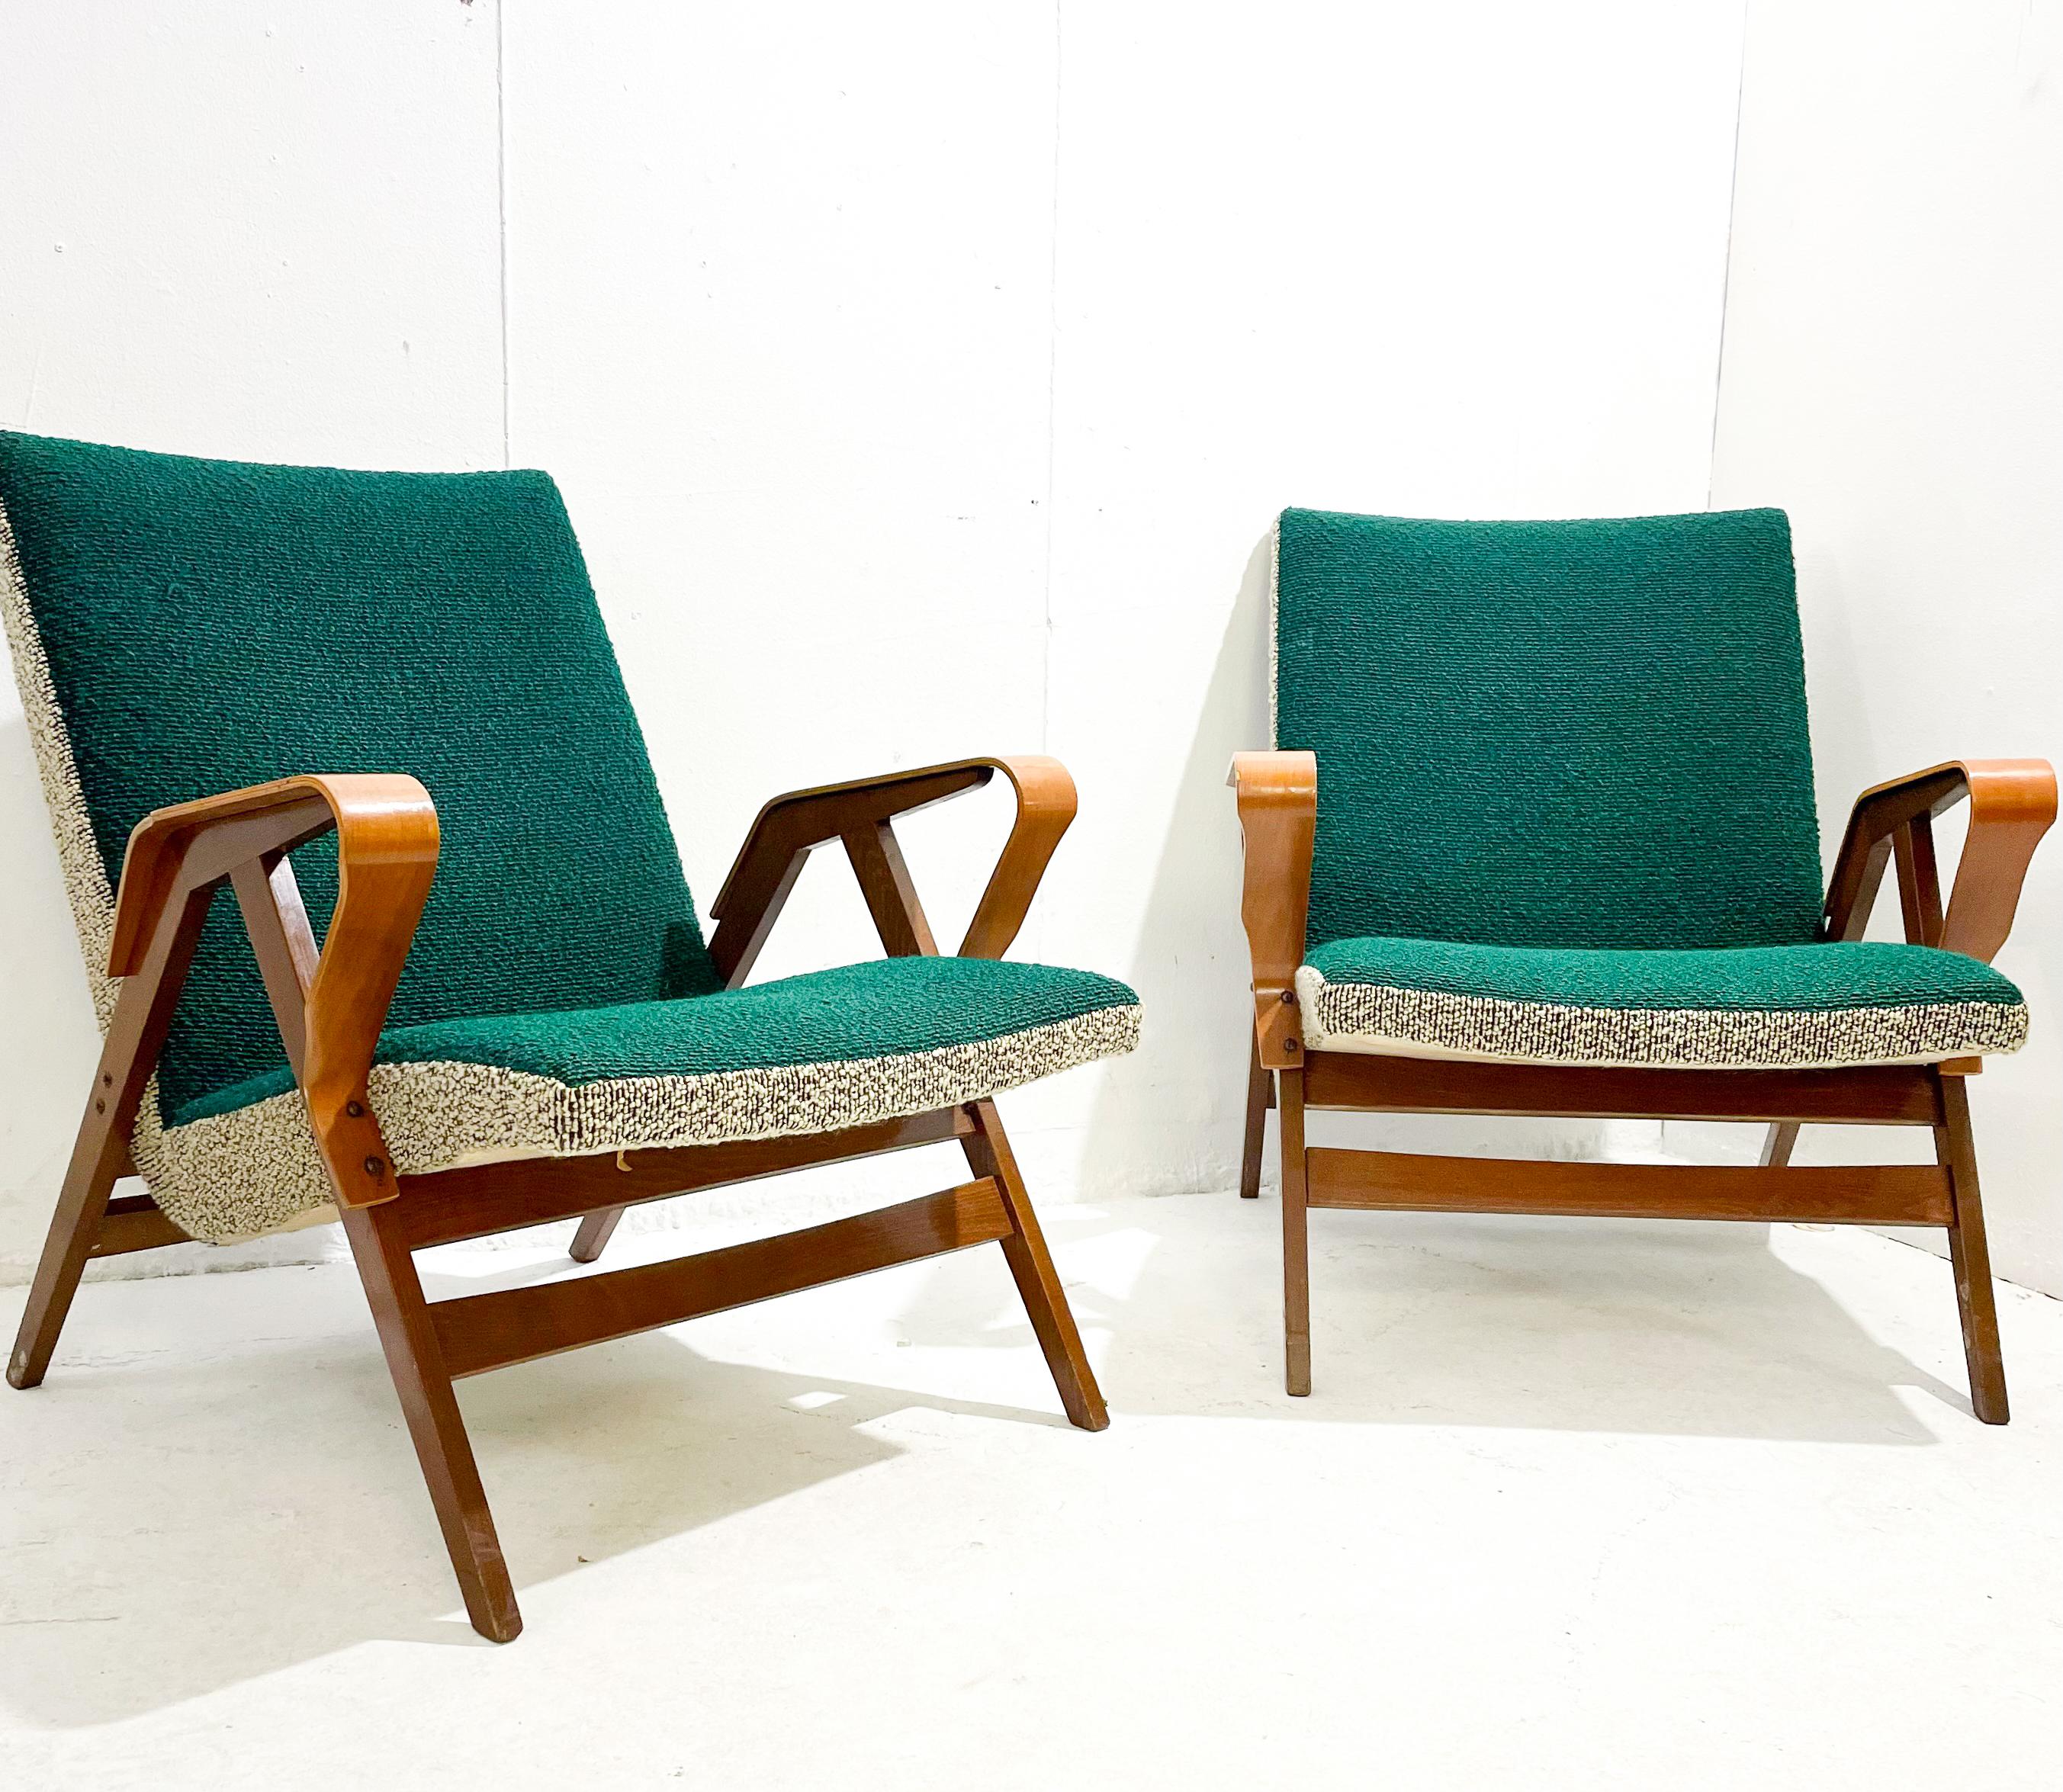 Pair of mid-century wooden armchairs - Italy 1950s.